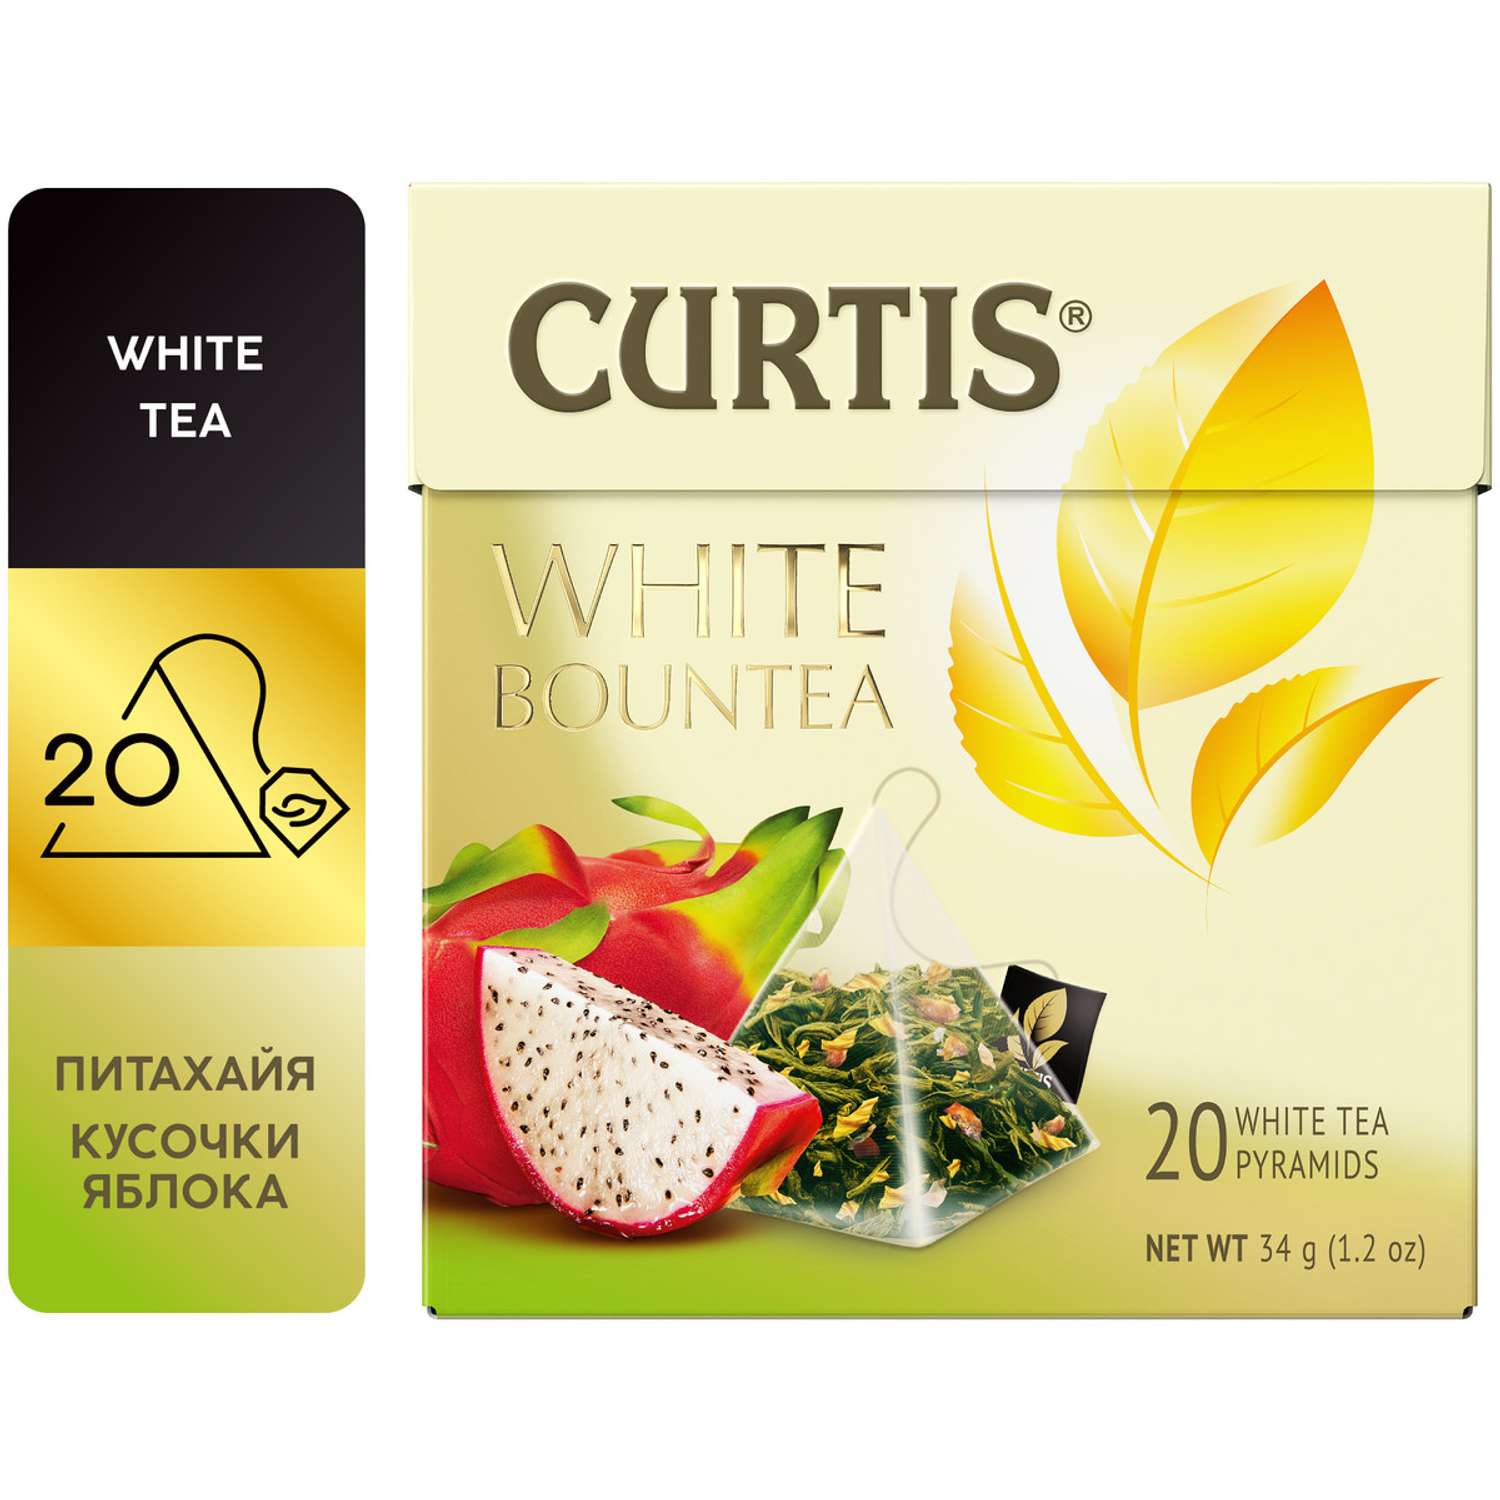 Чай белый Curtis White Bountea 20 пирамидок со вкусом питахайи кусочками яблока и лепестками роз - фото 2